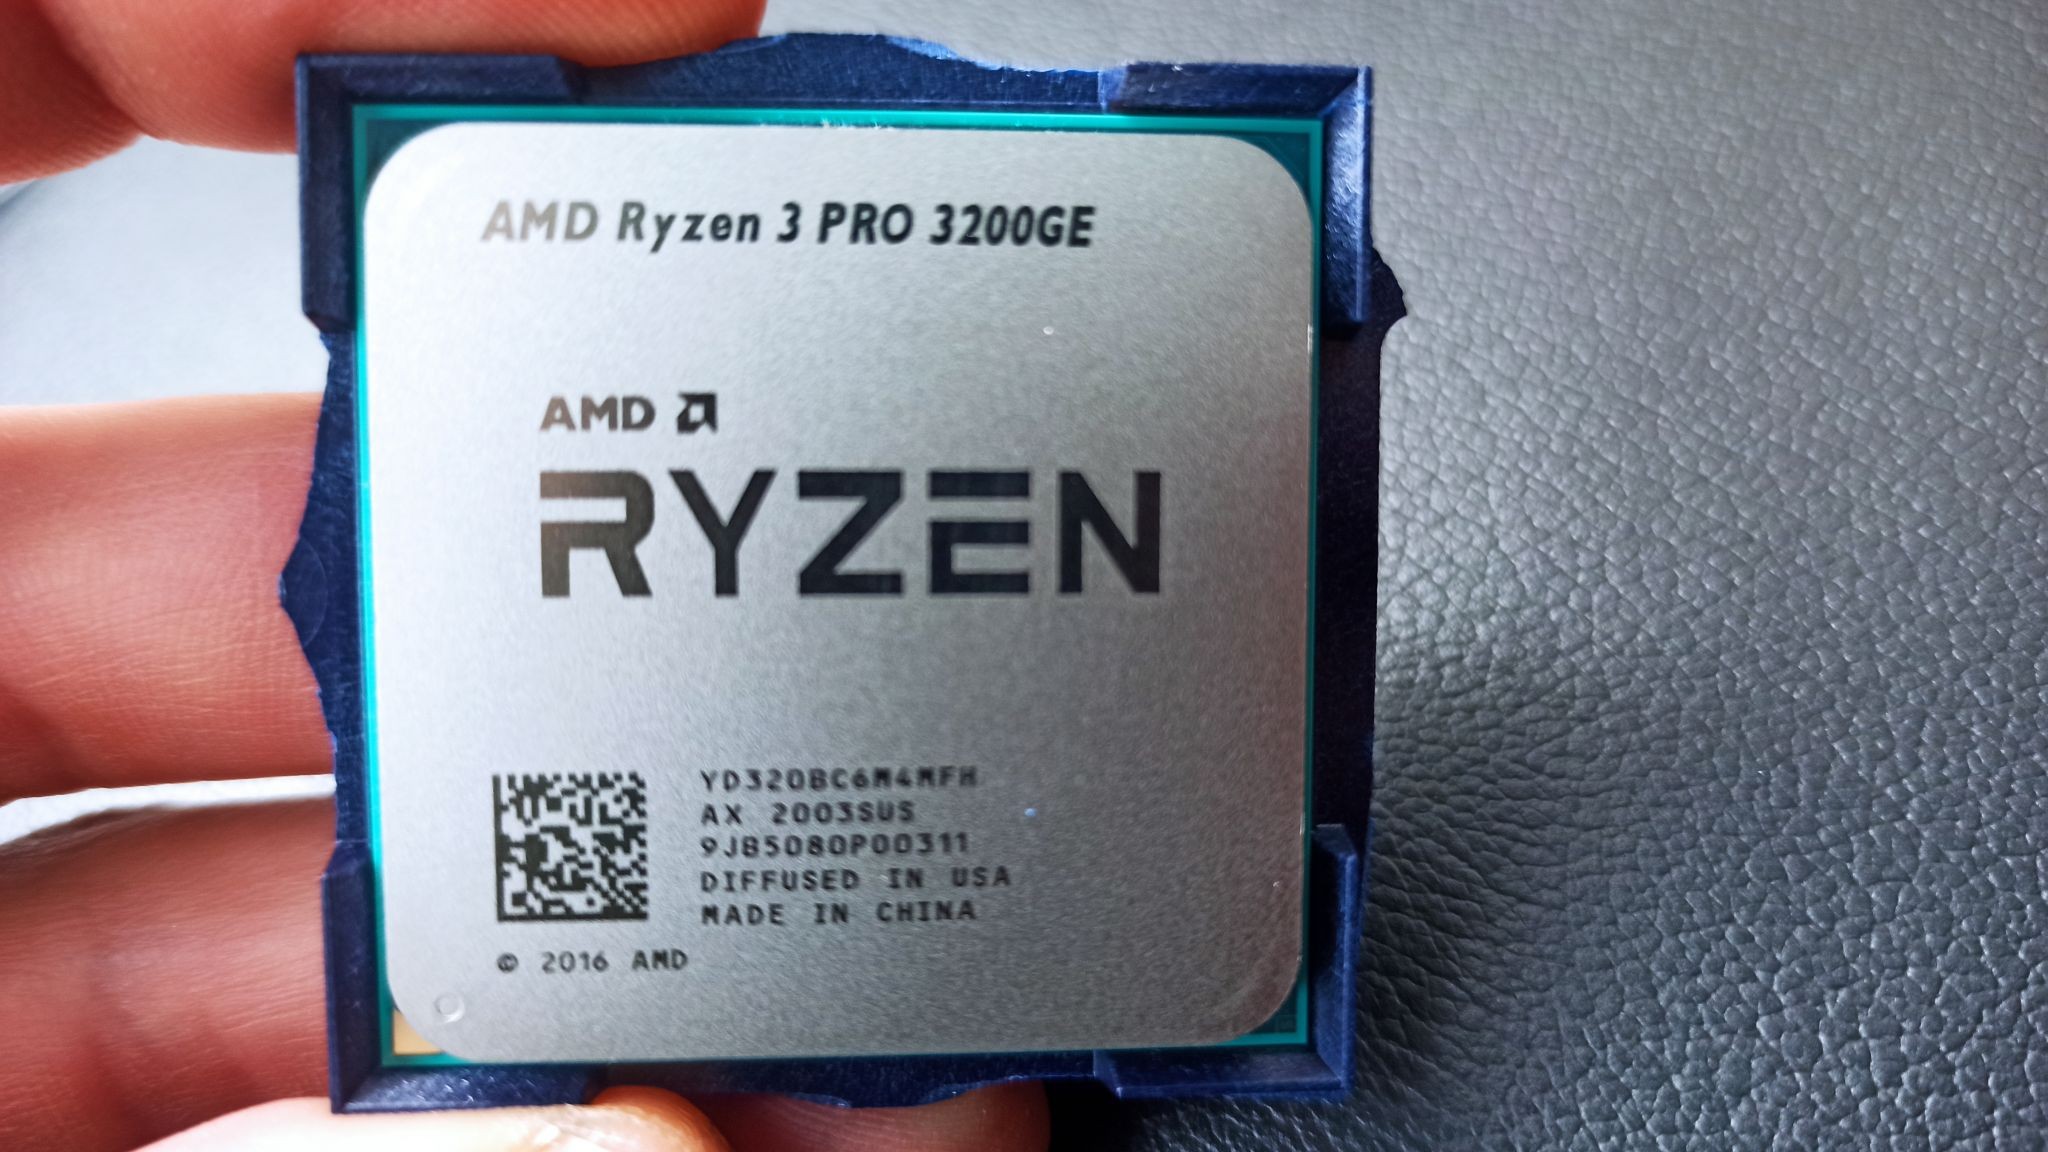 3 pro 3200g. Процессор AMD Ryzen 3 Pro 2100ge OEM. Процессор AMD Ryzen 3 3200g OEM. AMD Ryzen 3 Pro 3200g. Процессор AMD Ryzen 3 3200g Box.